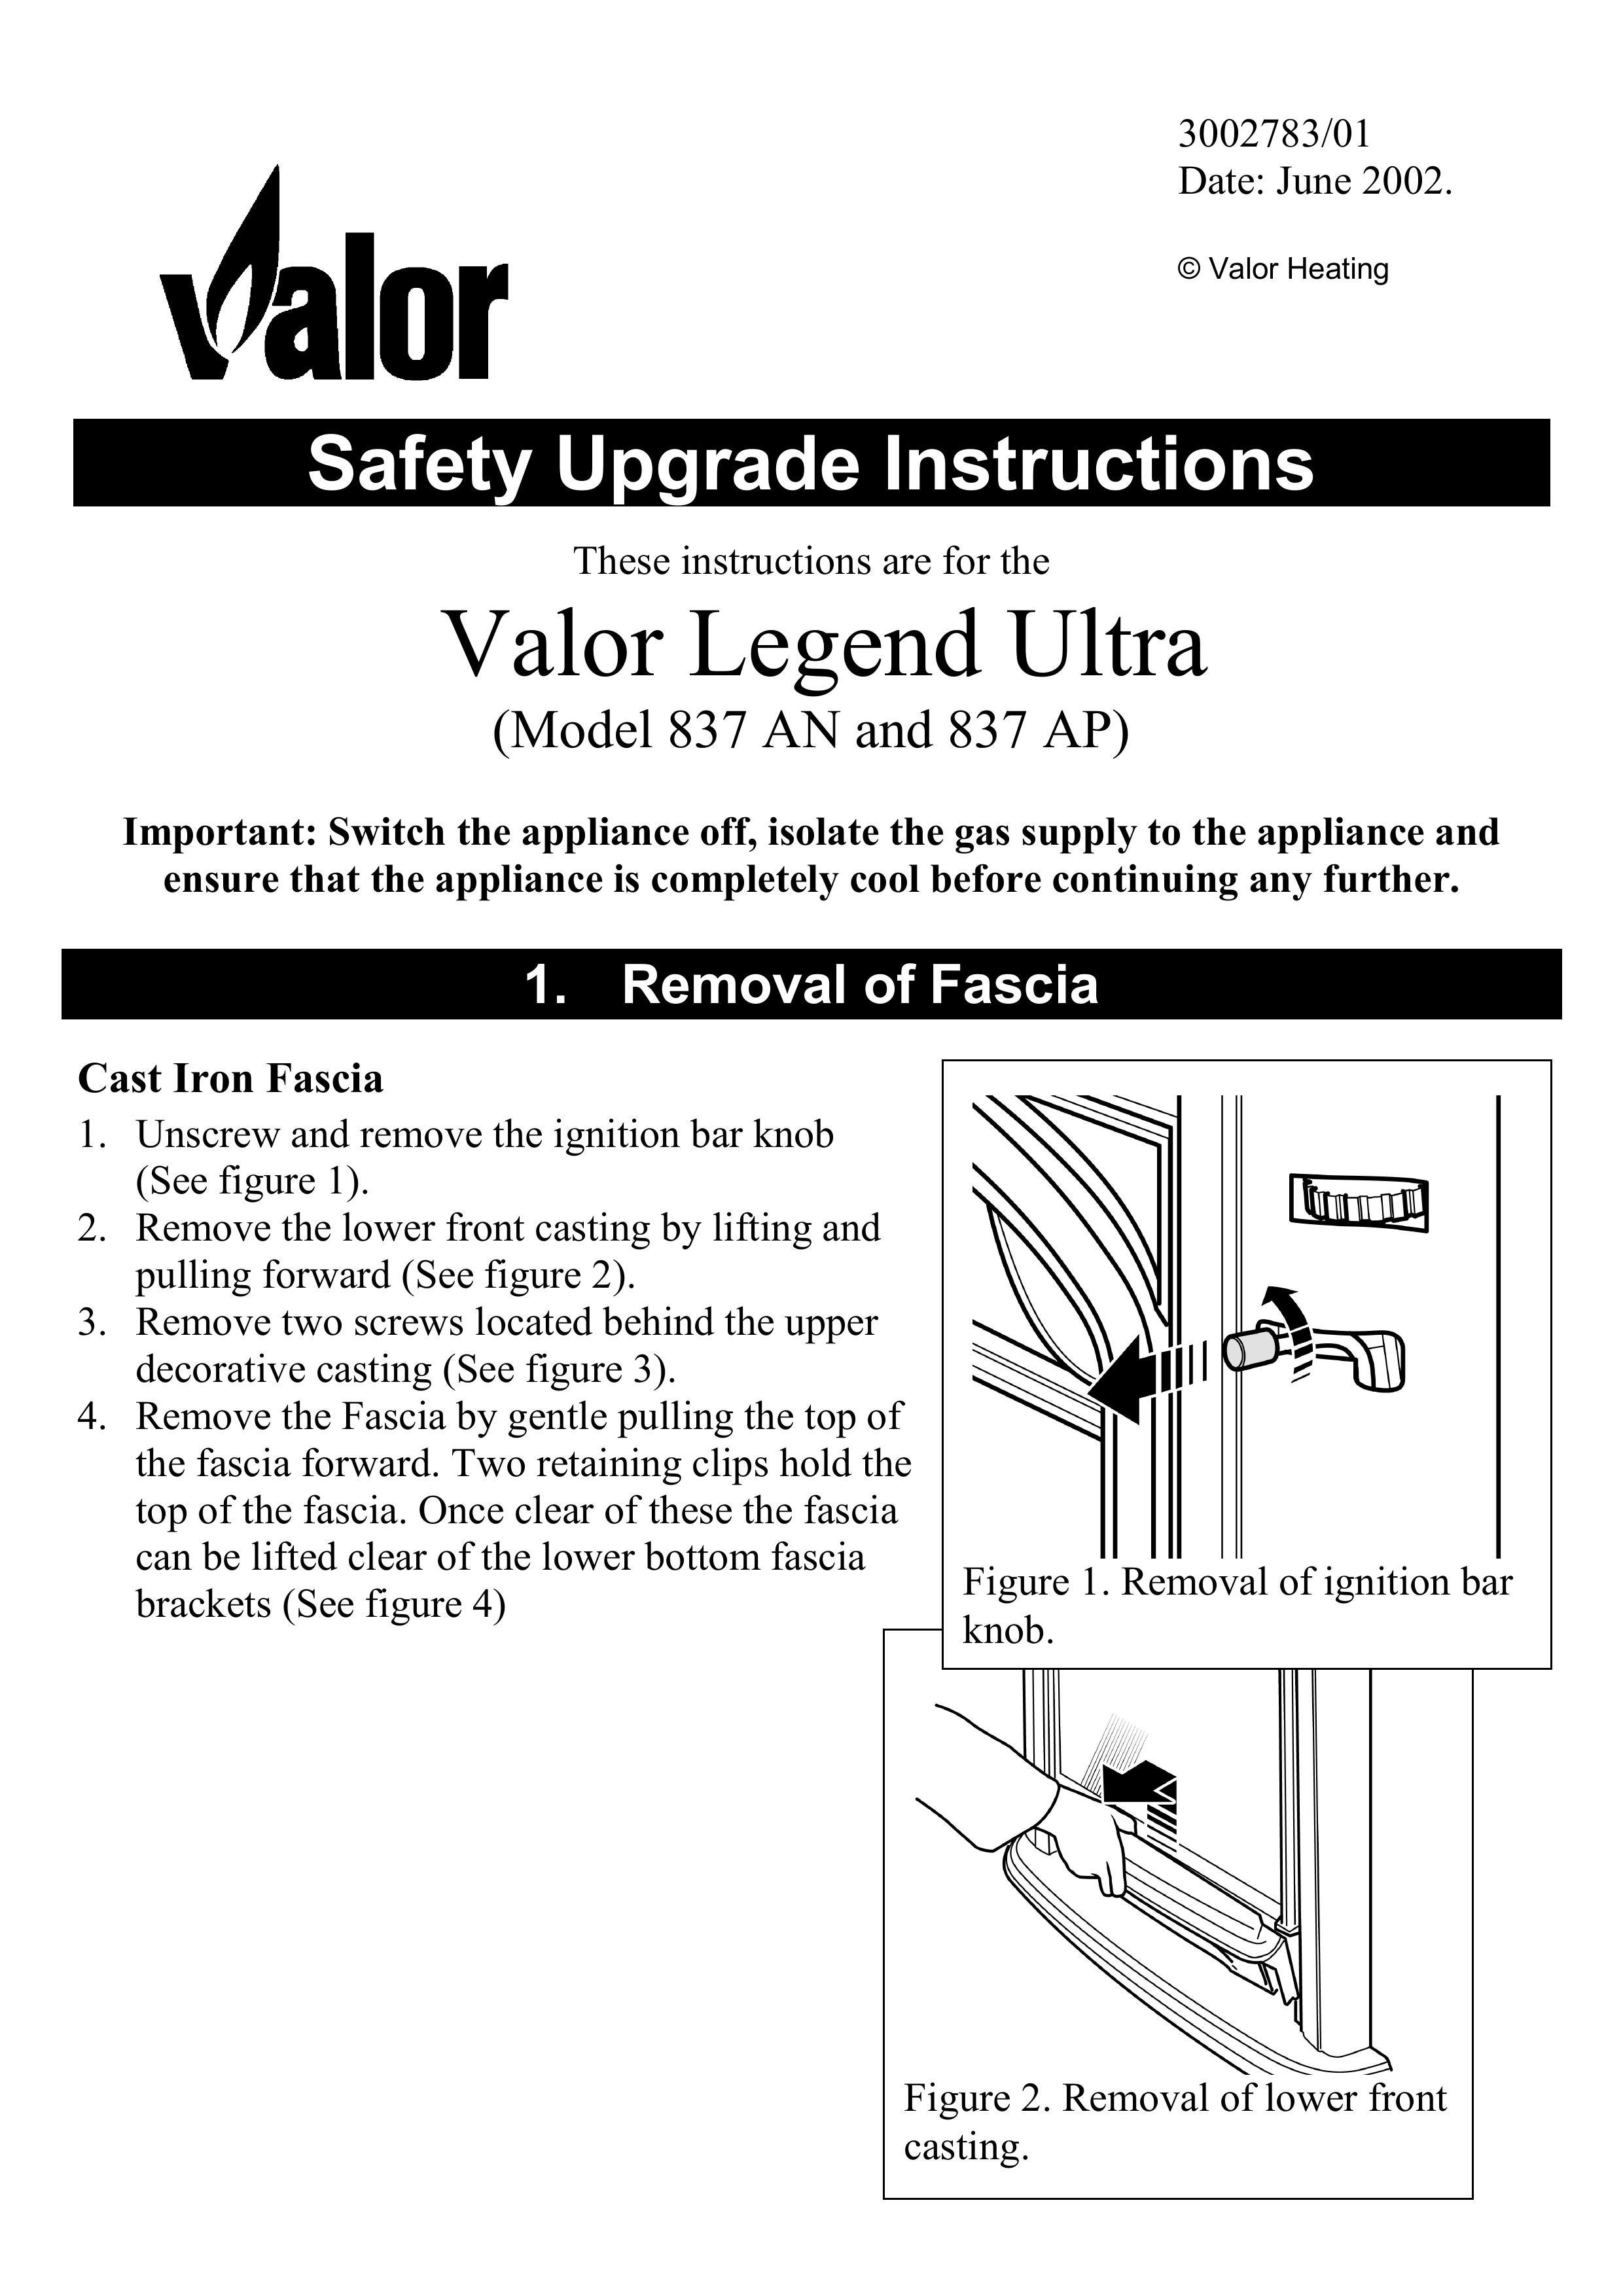 Valor Auto Companion Inc. 837 AP Outdoor Fireplace User Manual